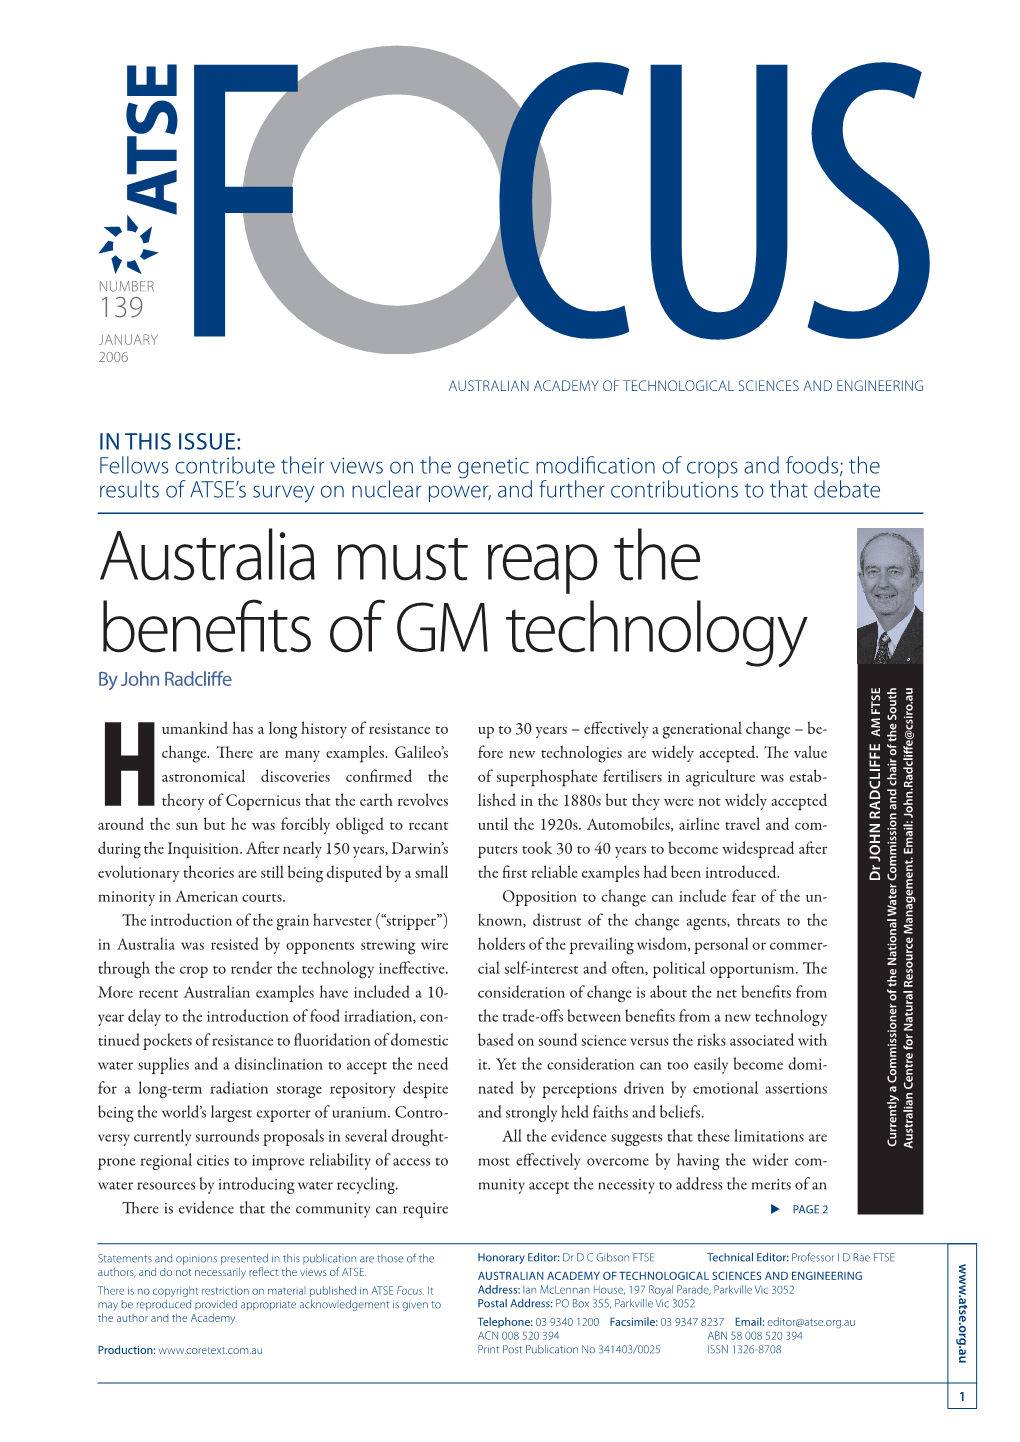 Australia Must Reap the Benefits of GM Technology